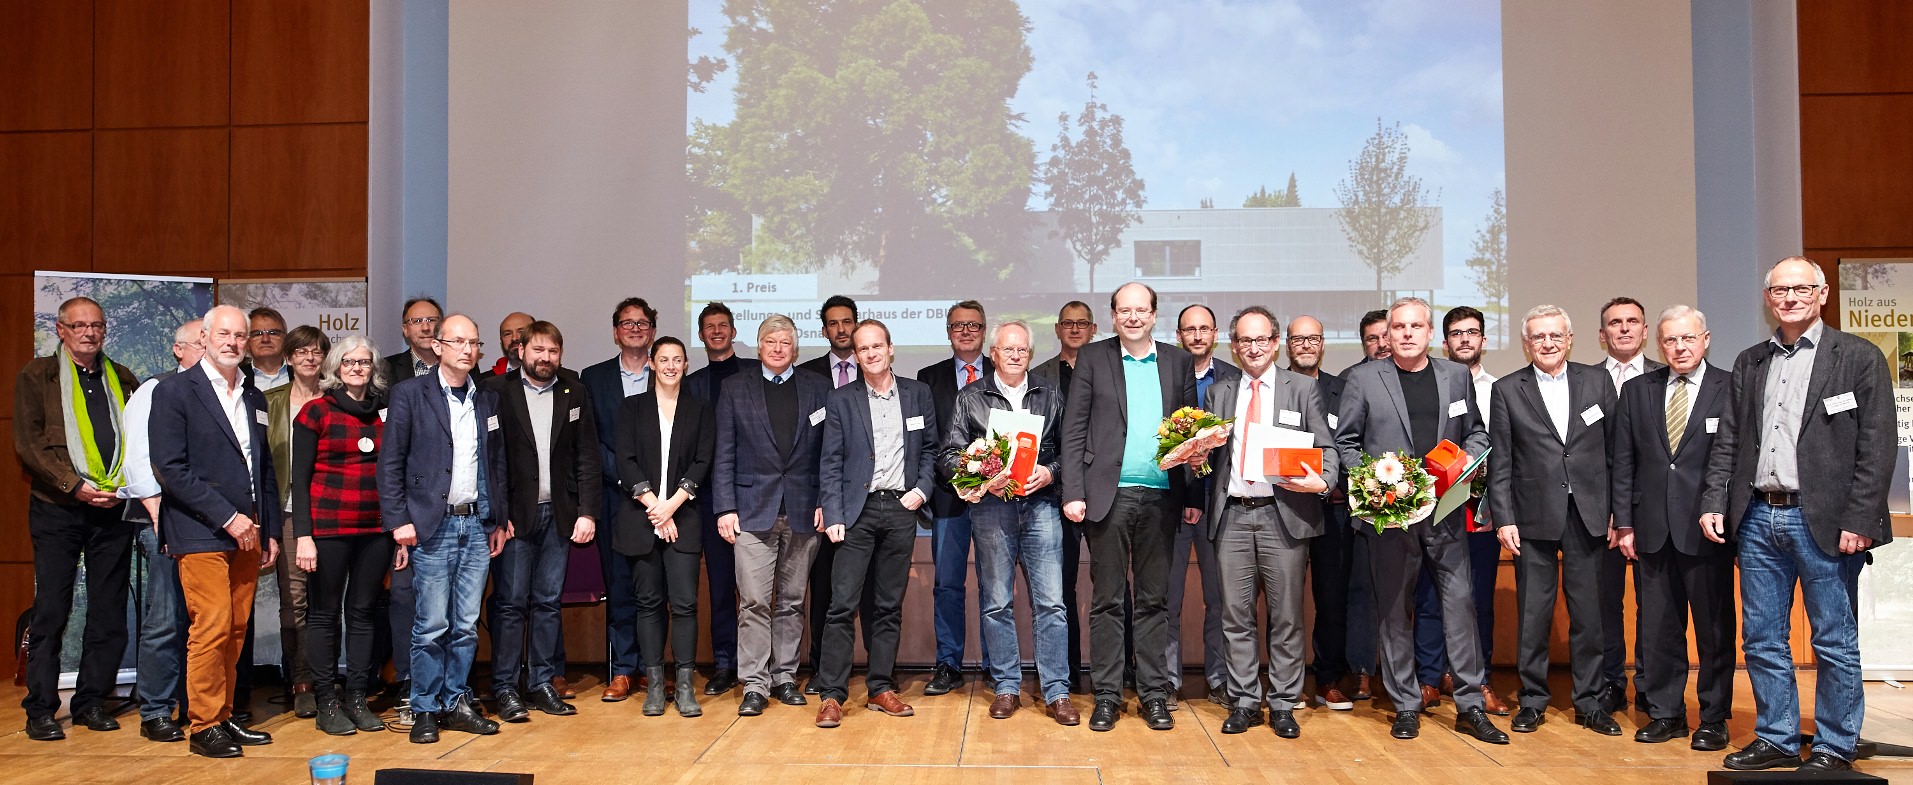 Gruppenbild der Preisträger mit Minister Christian Meyer